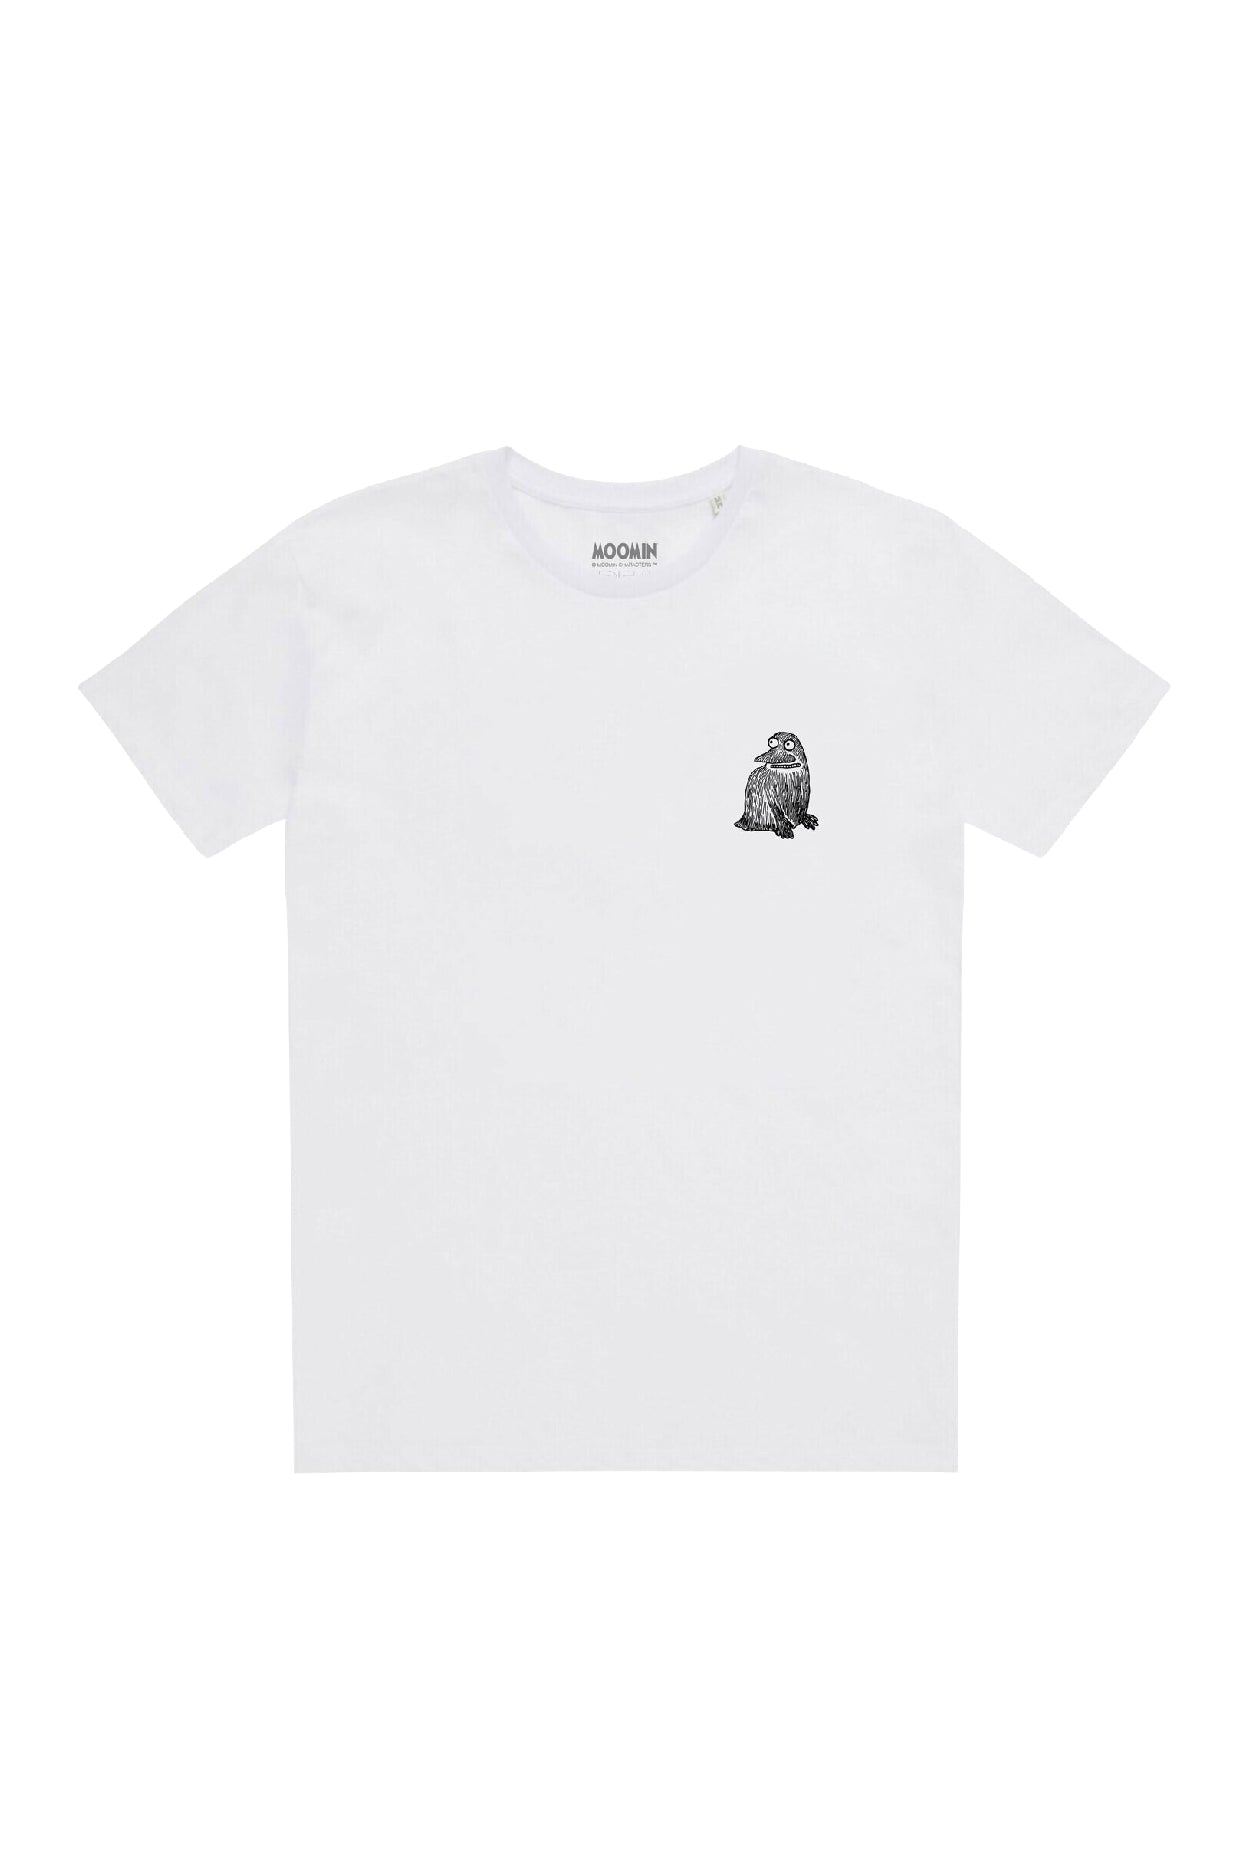 Moomin THE GROKE T-Shirt